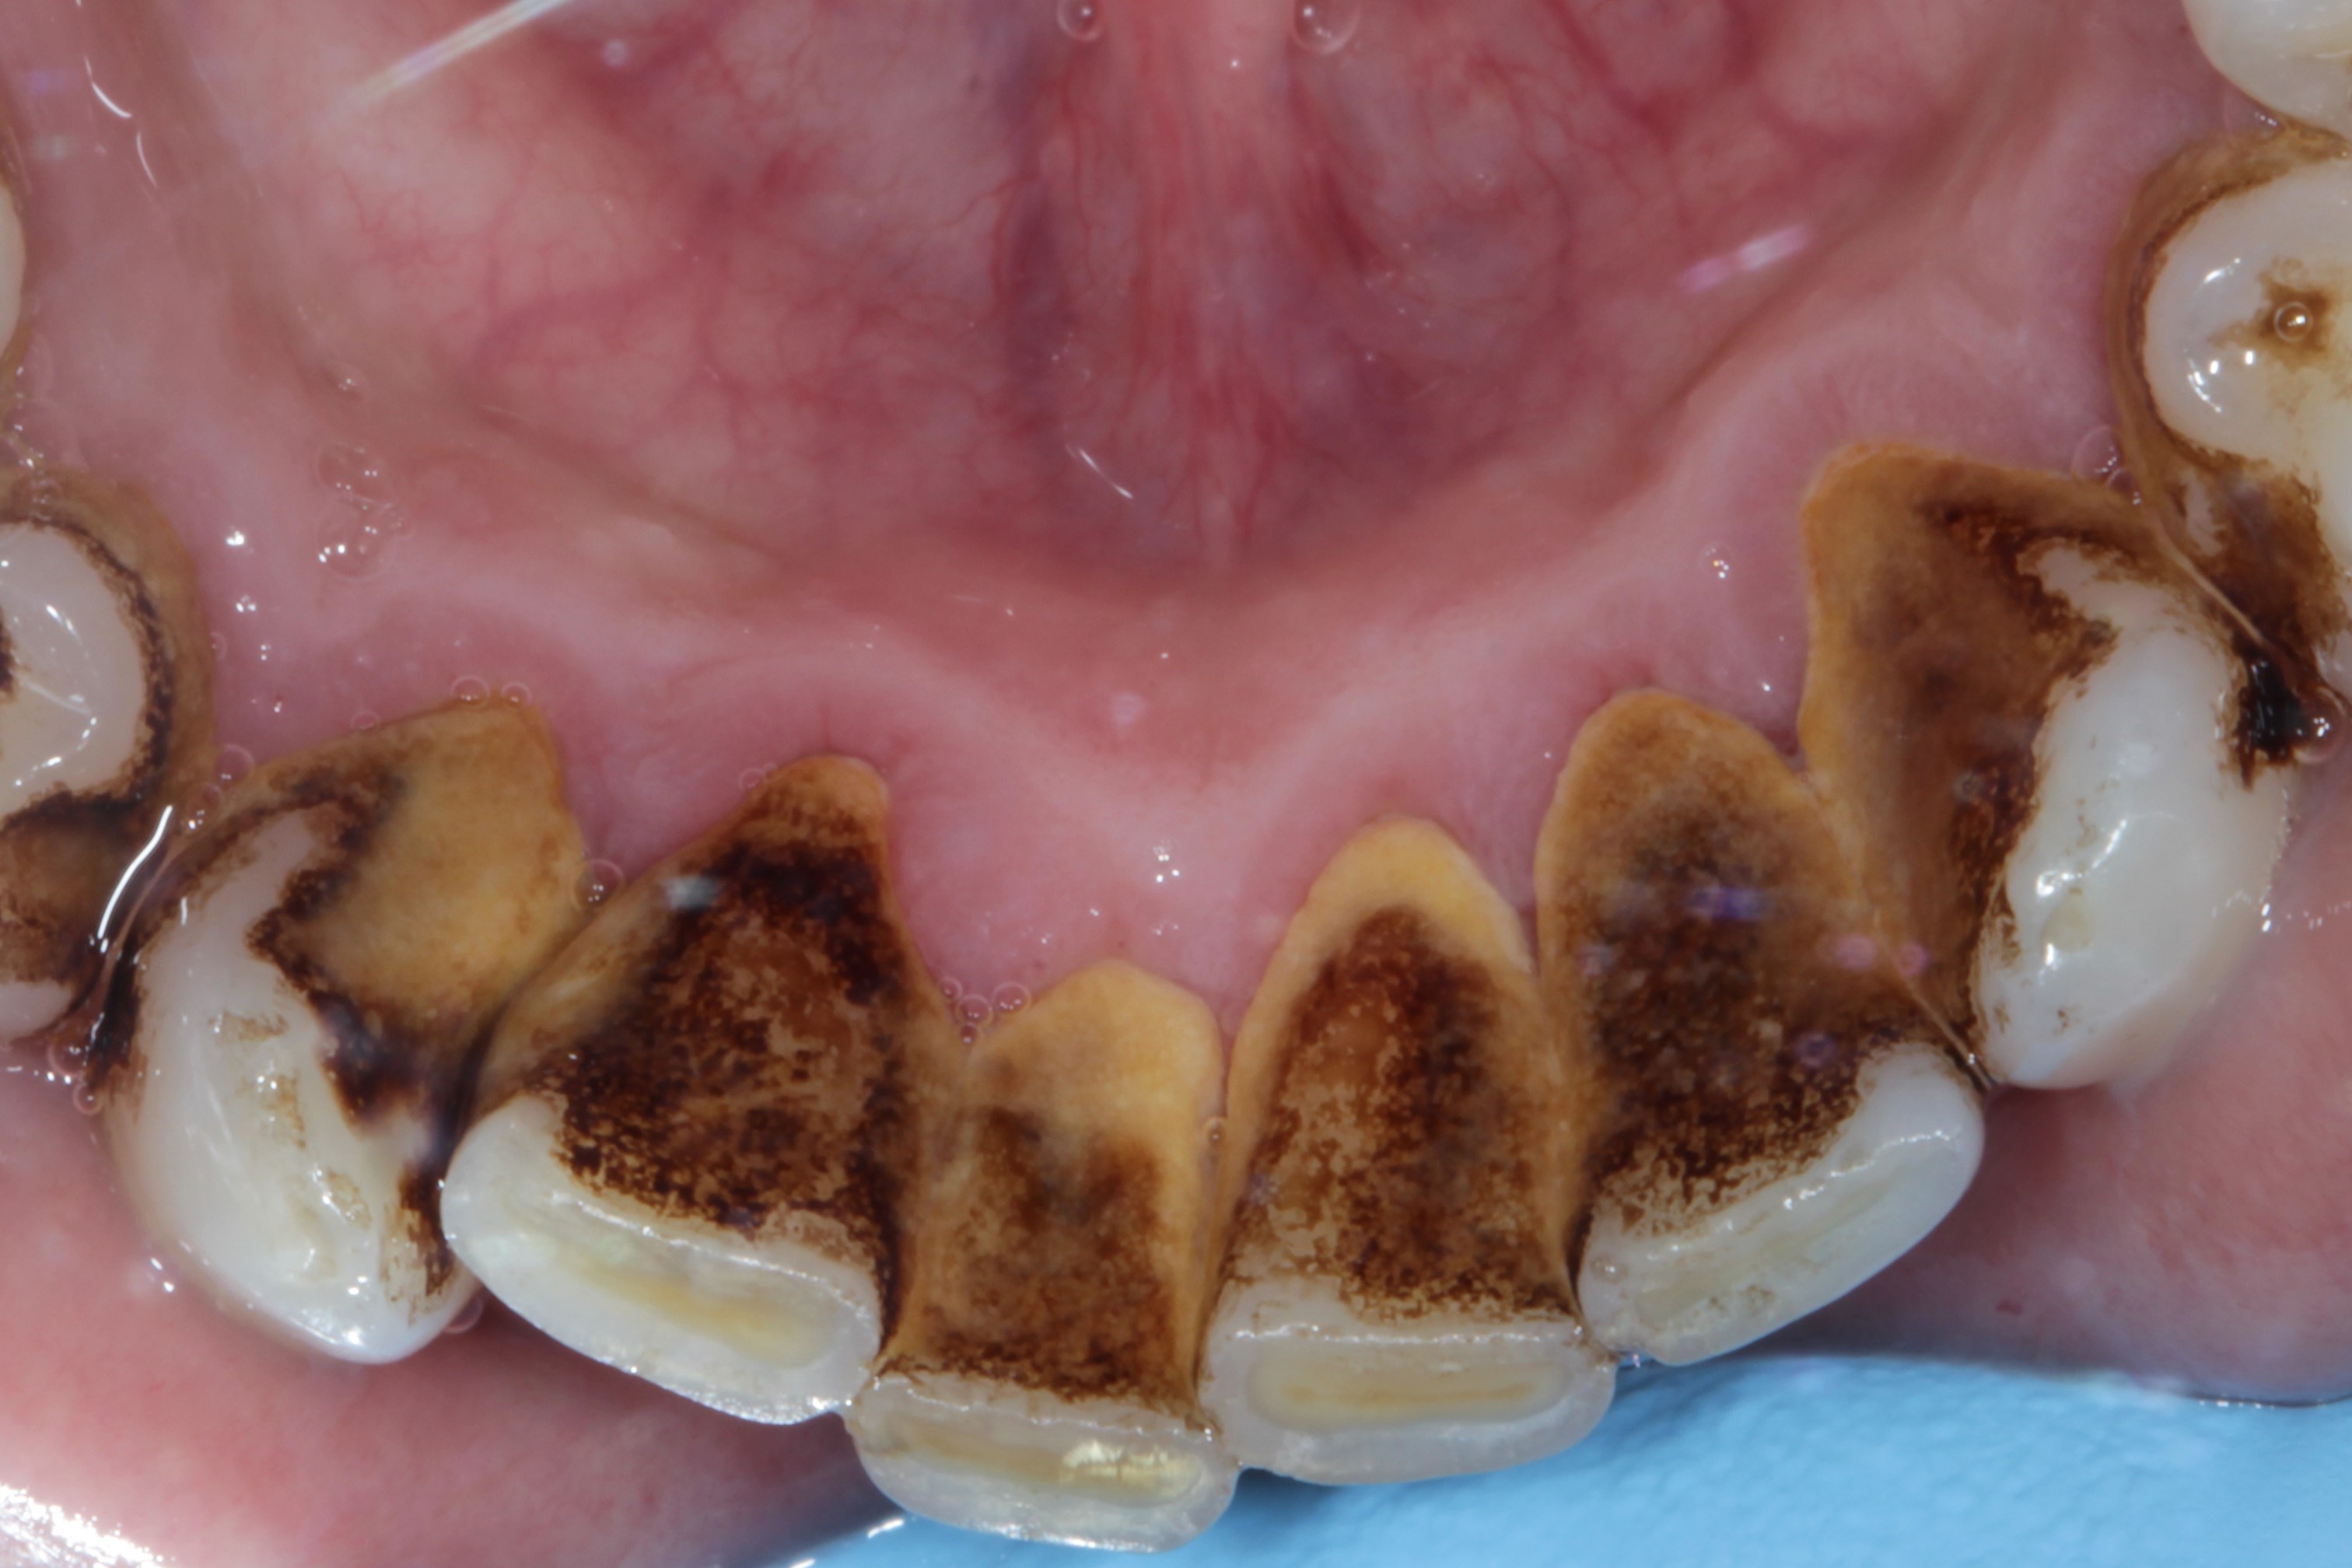 Before - Moorside Dental